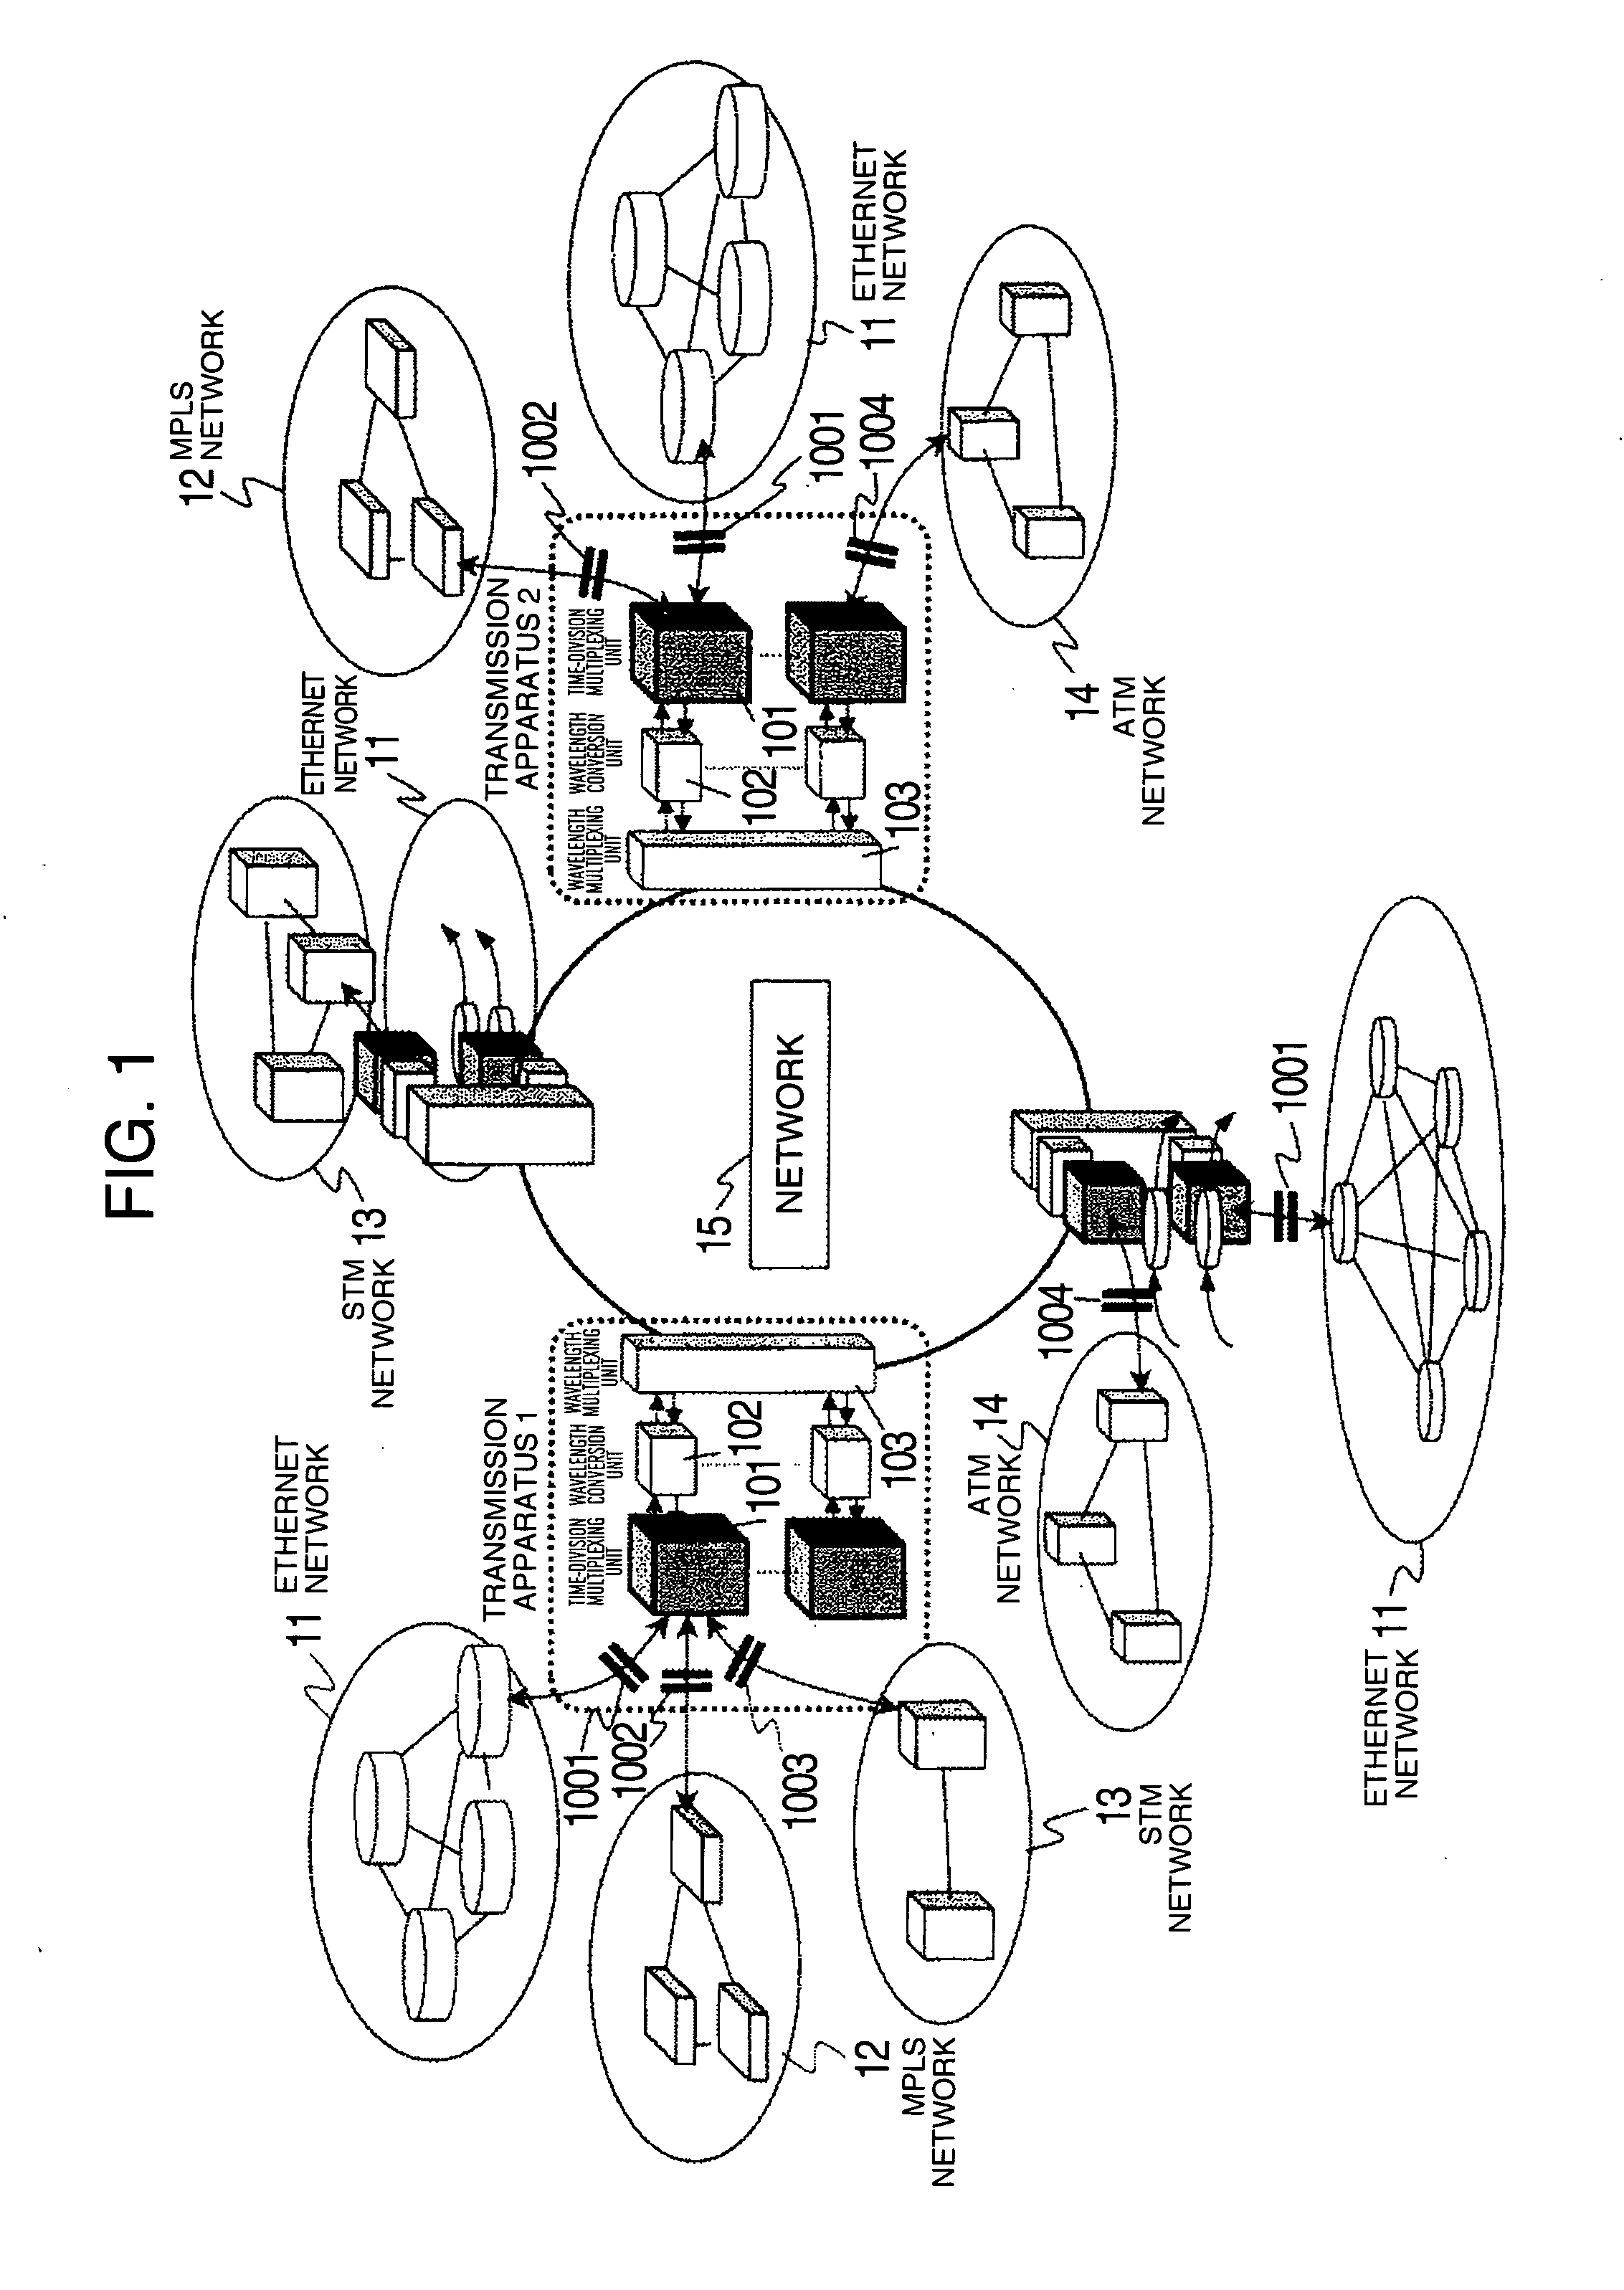 Multiplexed optical signal transmission apparatus